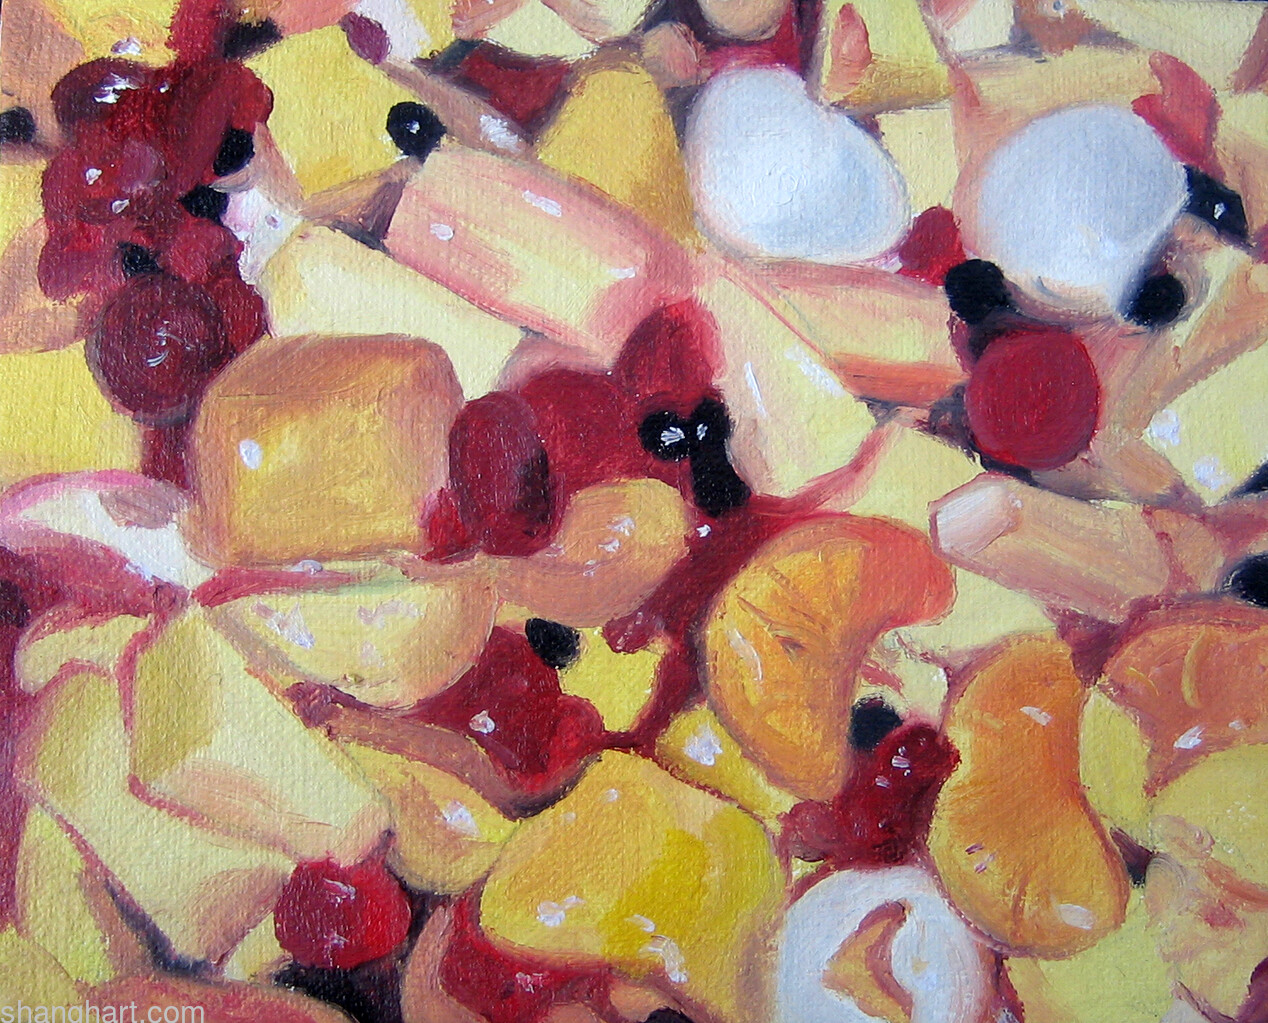 2009, 16x20cm, oil on canvas